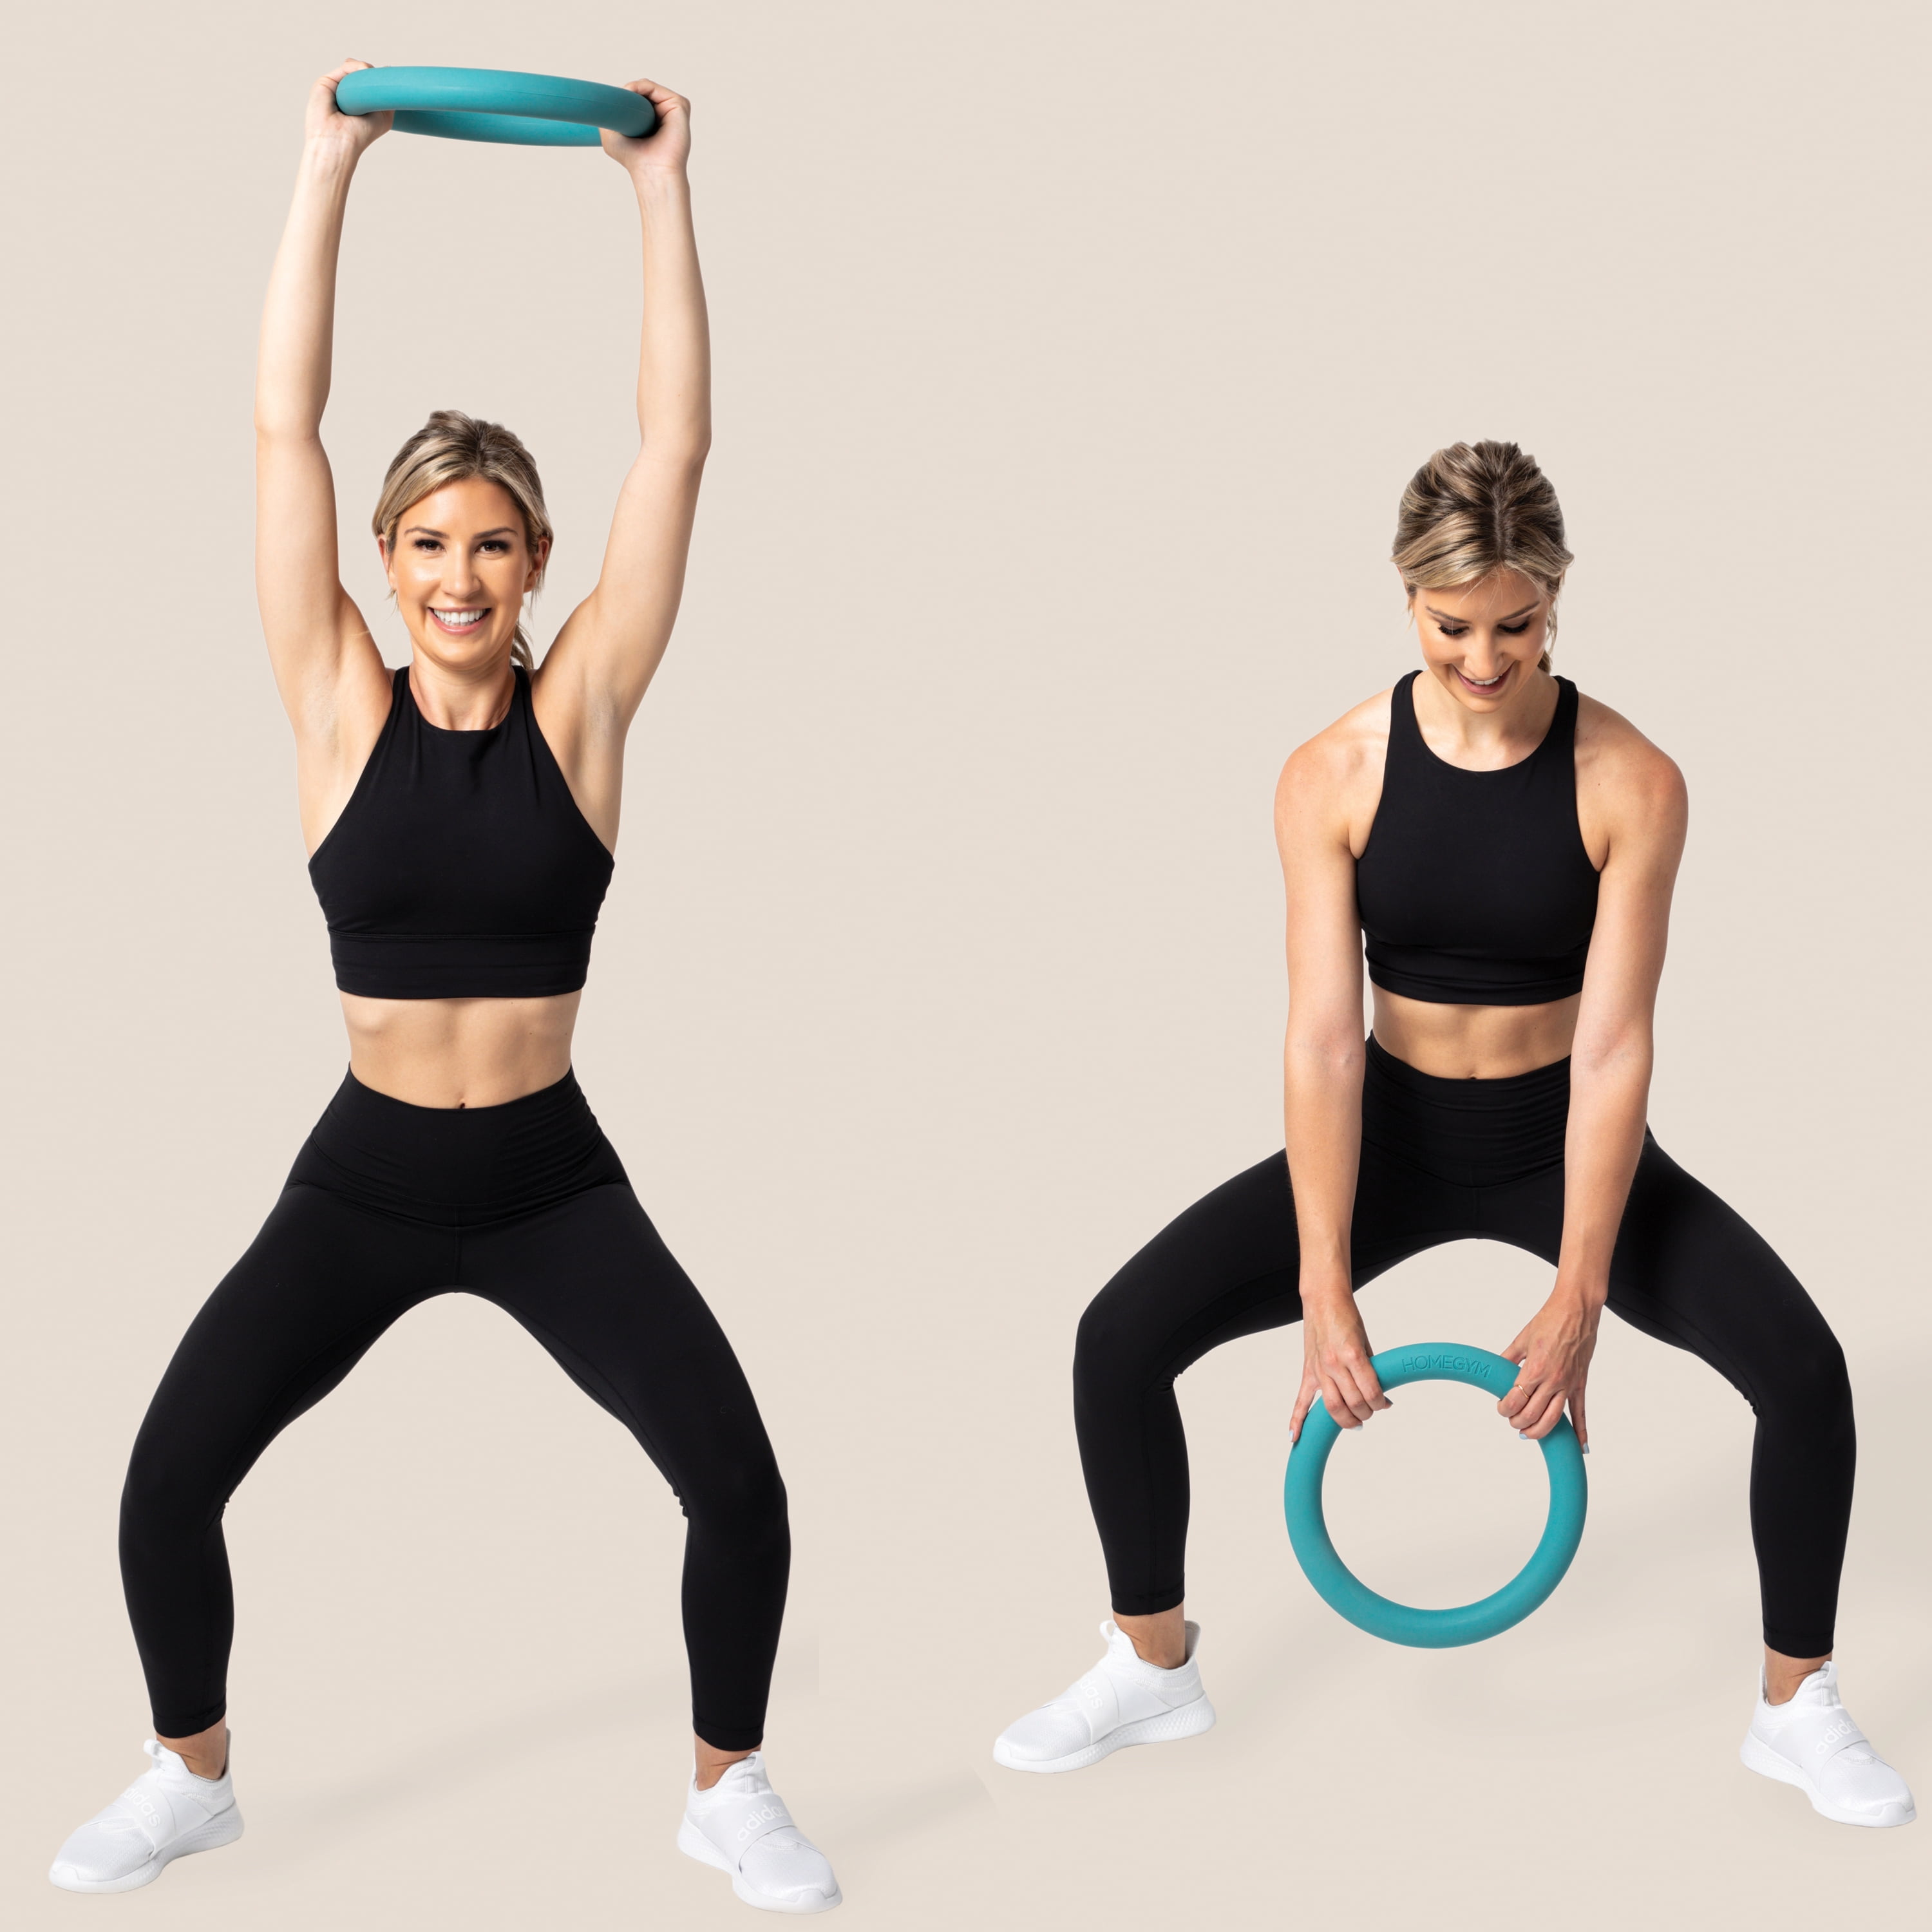 ZUKPUMNE Smart Weighted Fit Hoop, Smart Weight Loss Hoop - 2 in 1 Weighted  Fitness Hoop Massage Design for Women : Amazon.co.uk: Sports & Outdoors